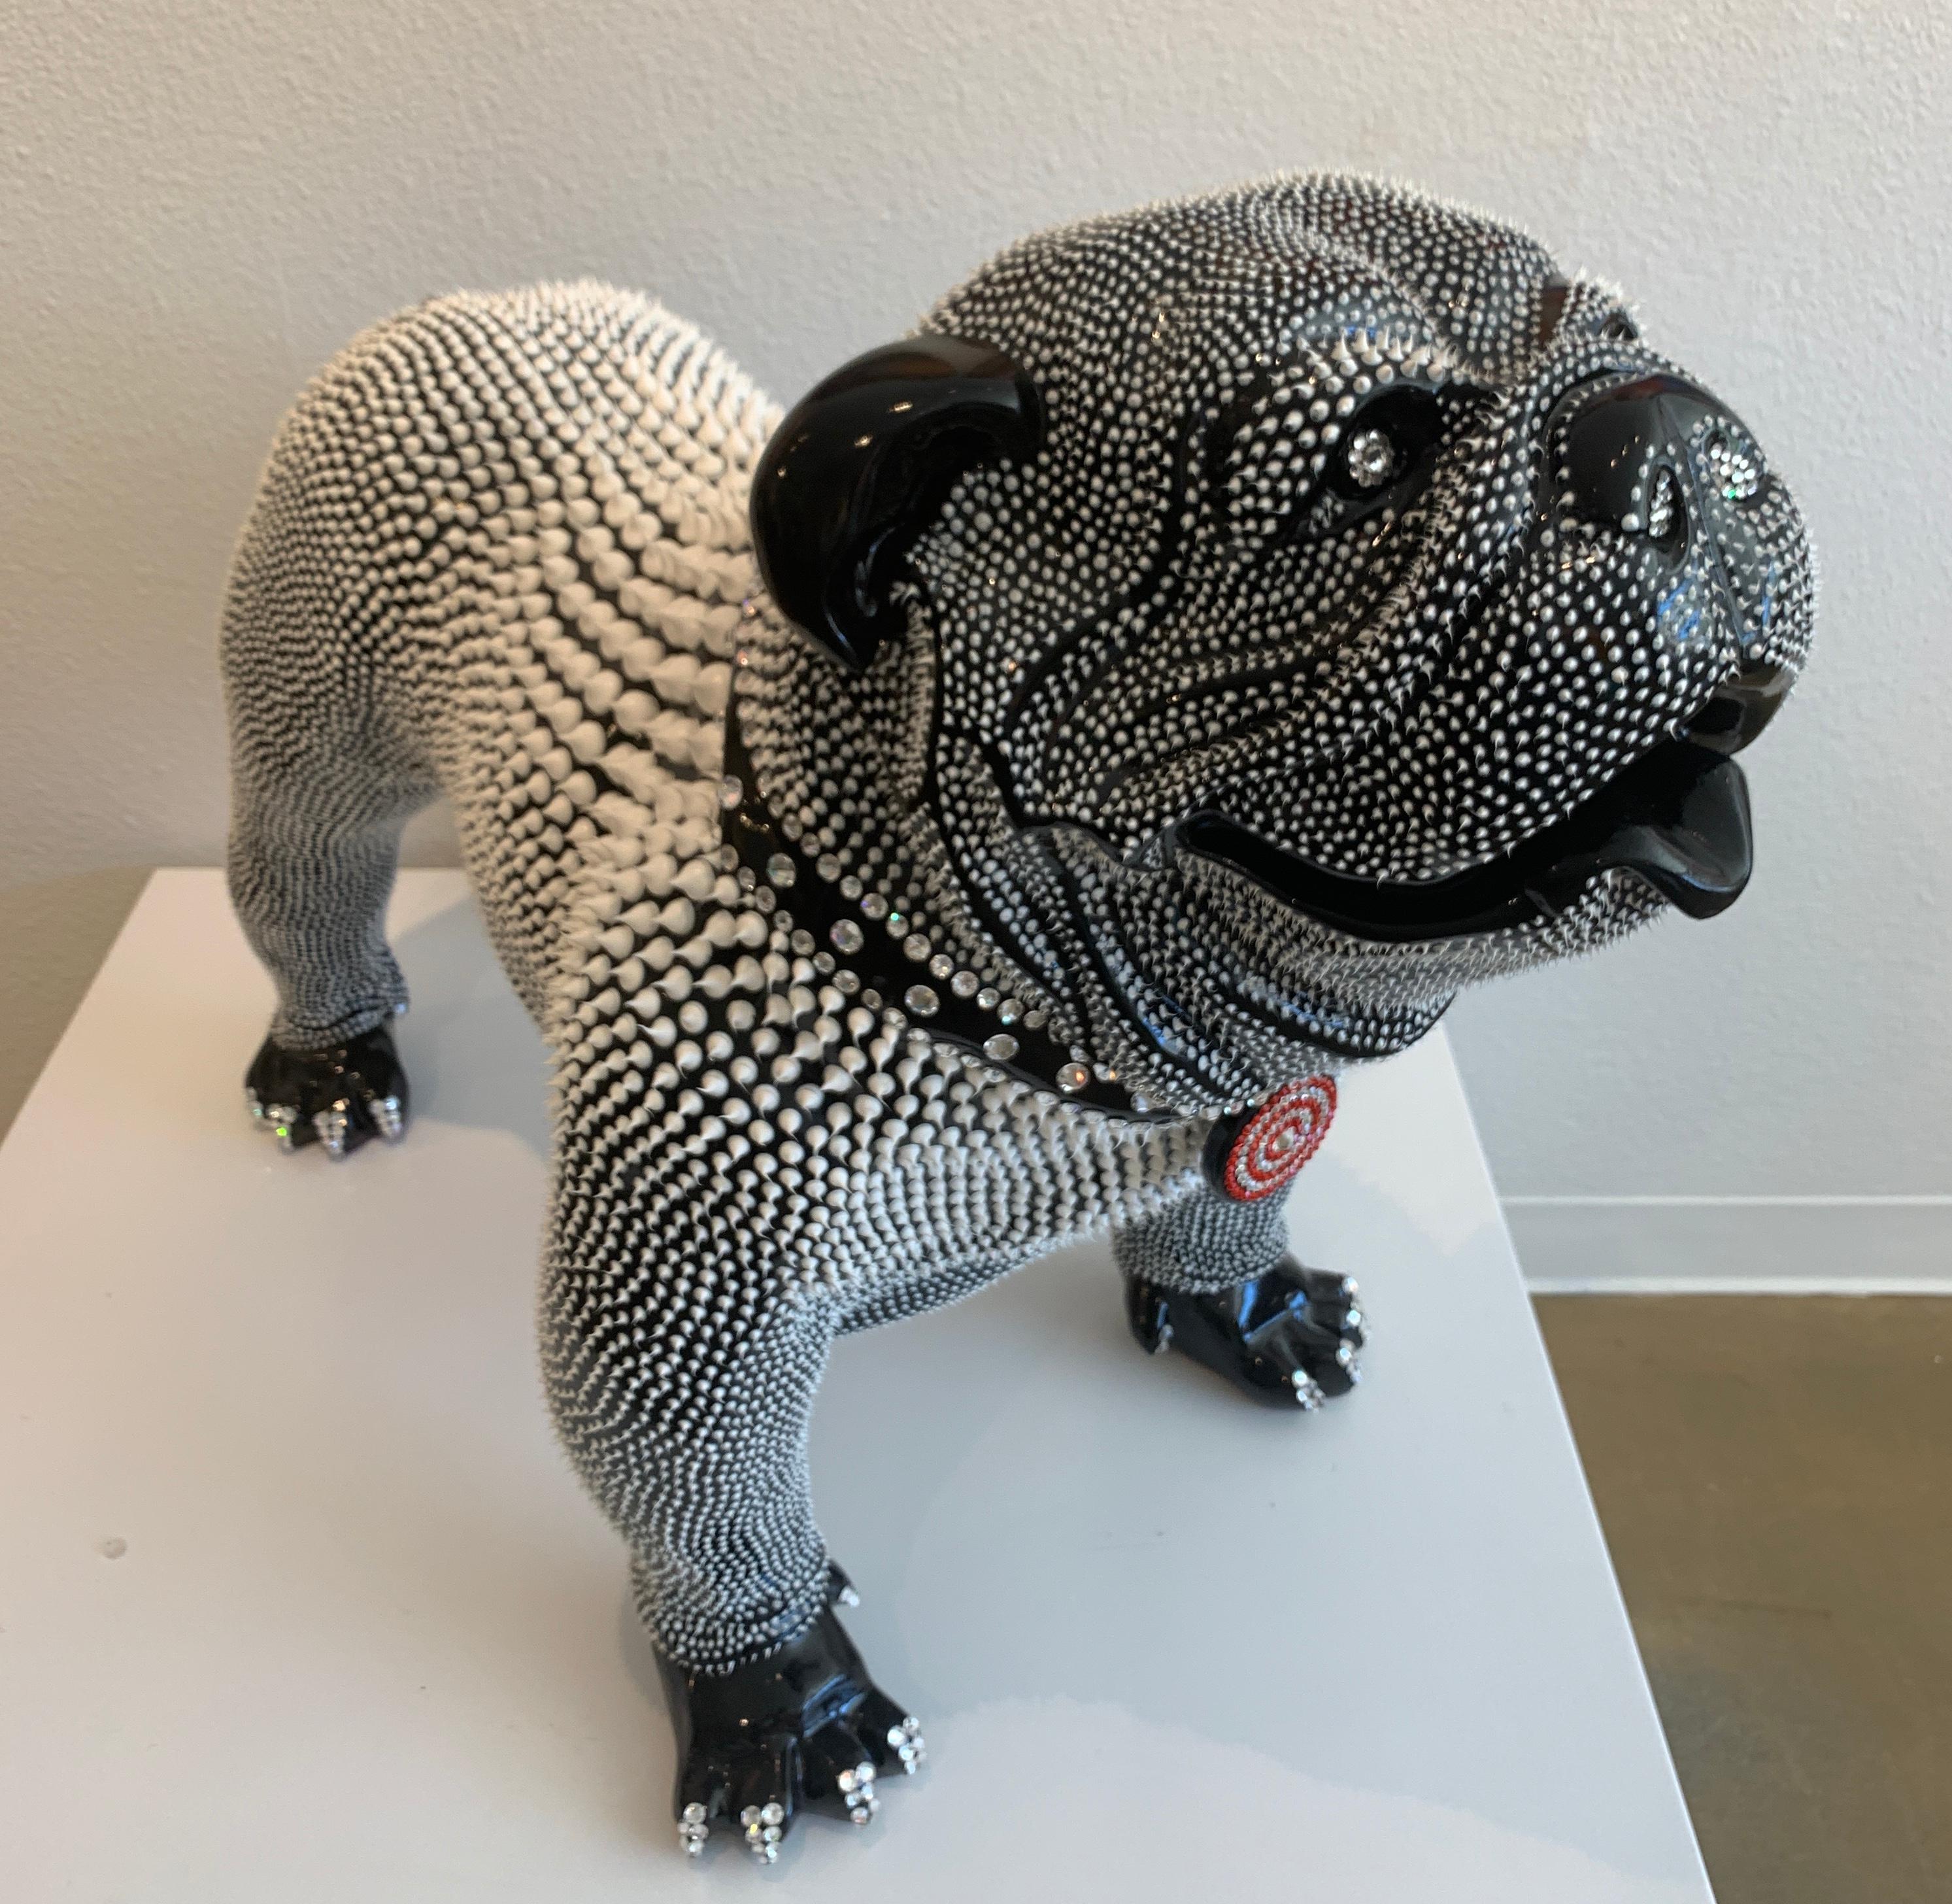 Eddy Maniez Figurative Sculpture - Bulldog #1 and Bowl